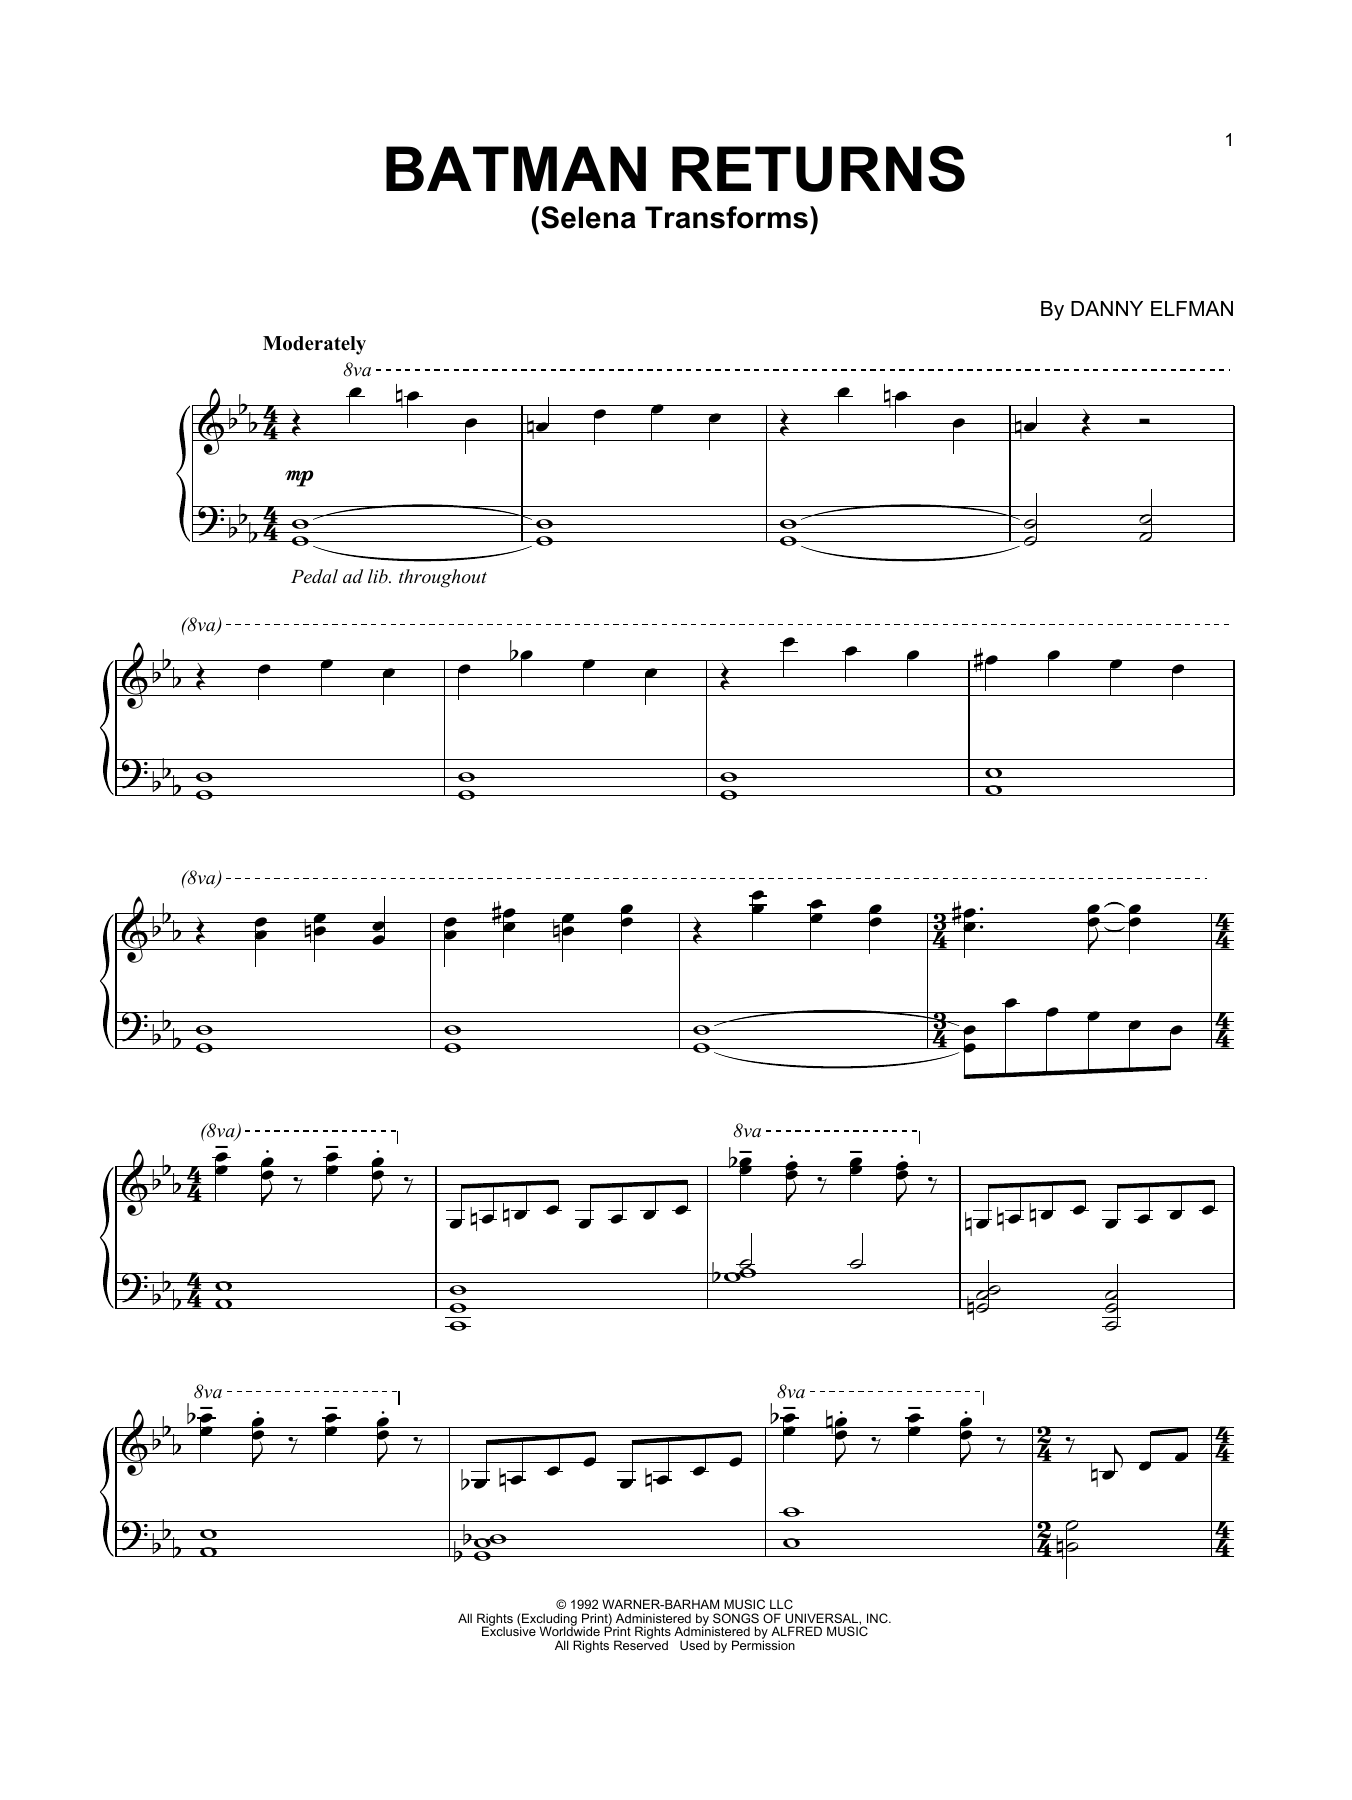 Danny Elfman Batman Returns (Selena Transforms) Sheet Music Notes & Chords for Piano Solo - Download or Print PDF